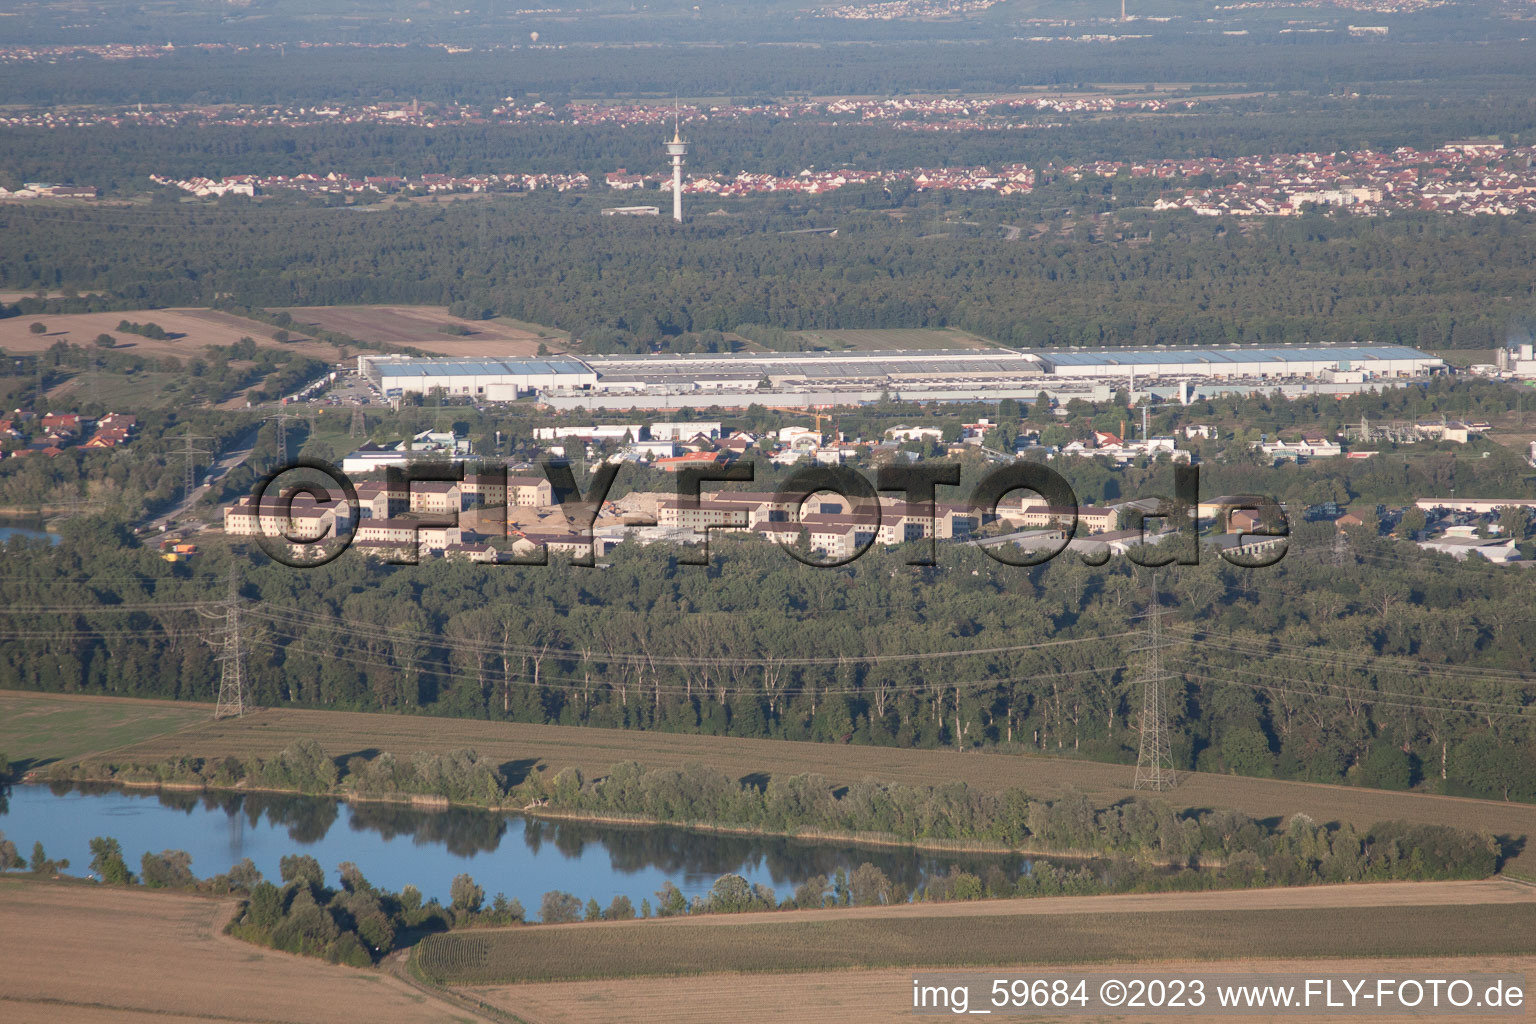 Vue aérienne de Salmkaserner et Goddyear du sud à Philippsburg dans le département Bade-Wurtemberg, Allemagne